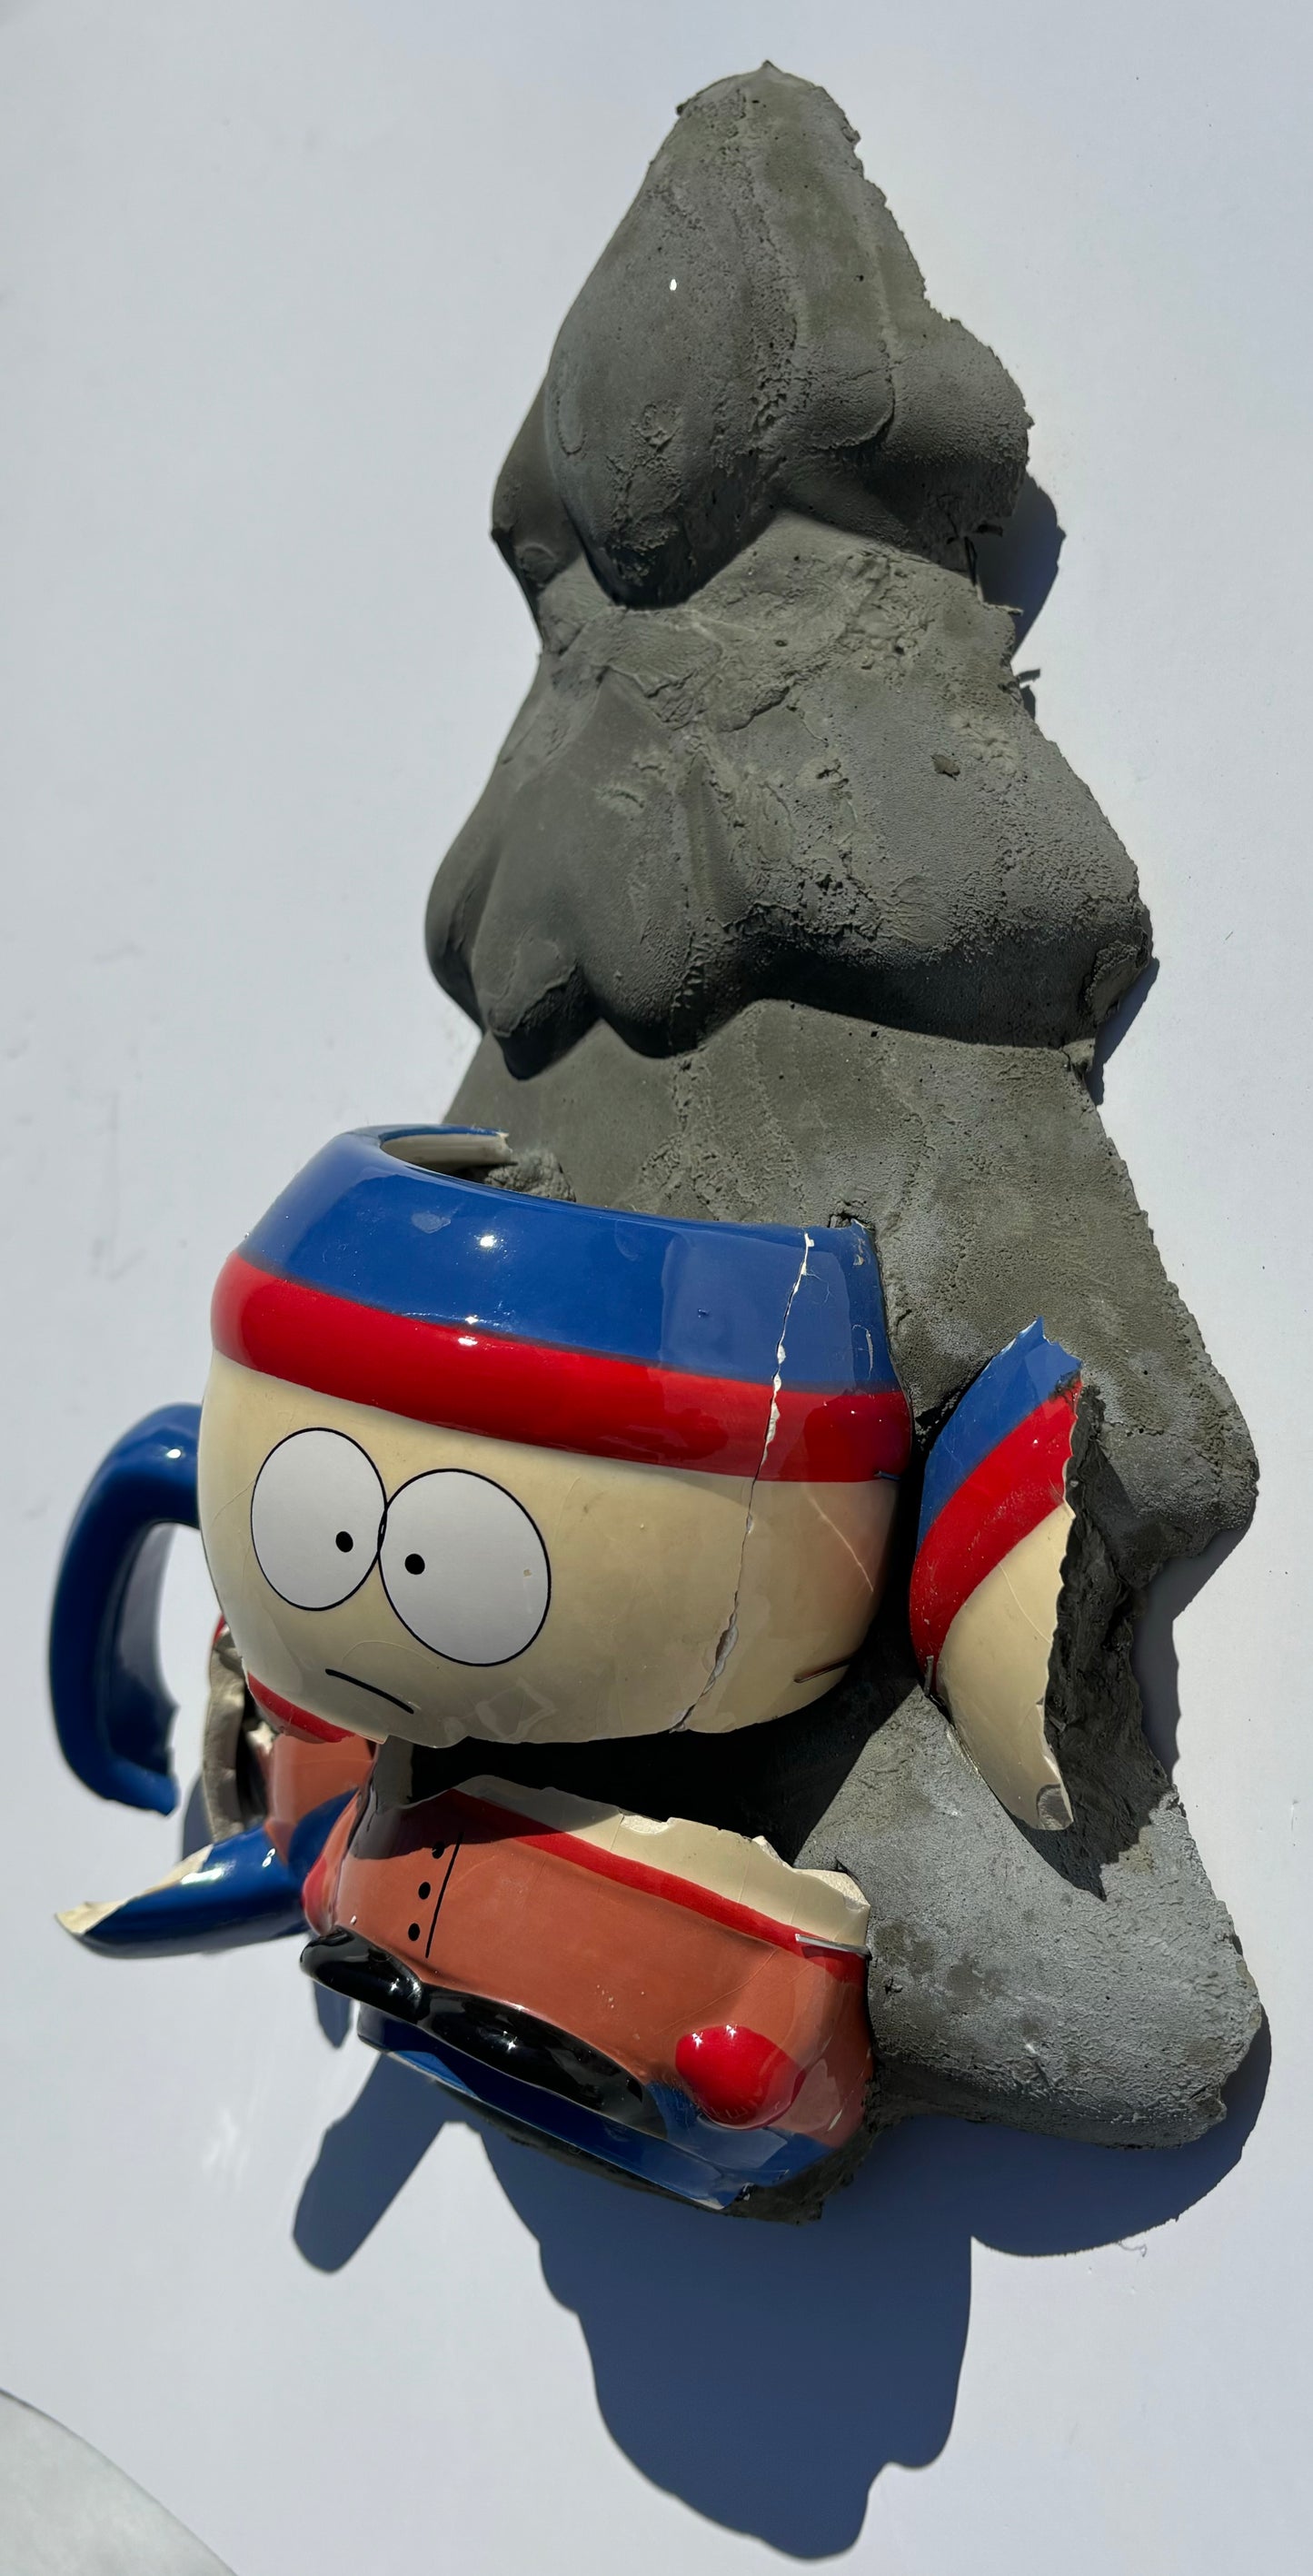 "Stan Suffering Ass Burgers": South Park's Stan on Conifer Tree Ceramic & Concrete Alt Toons Smacker